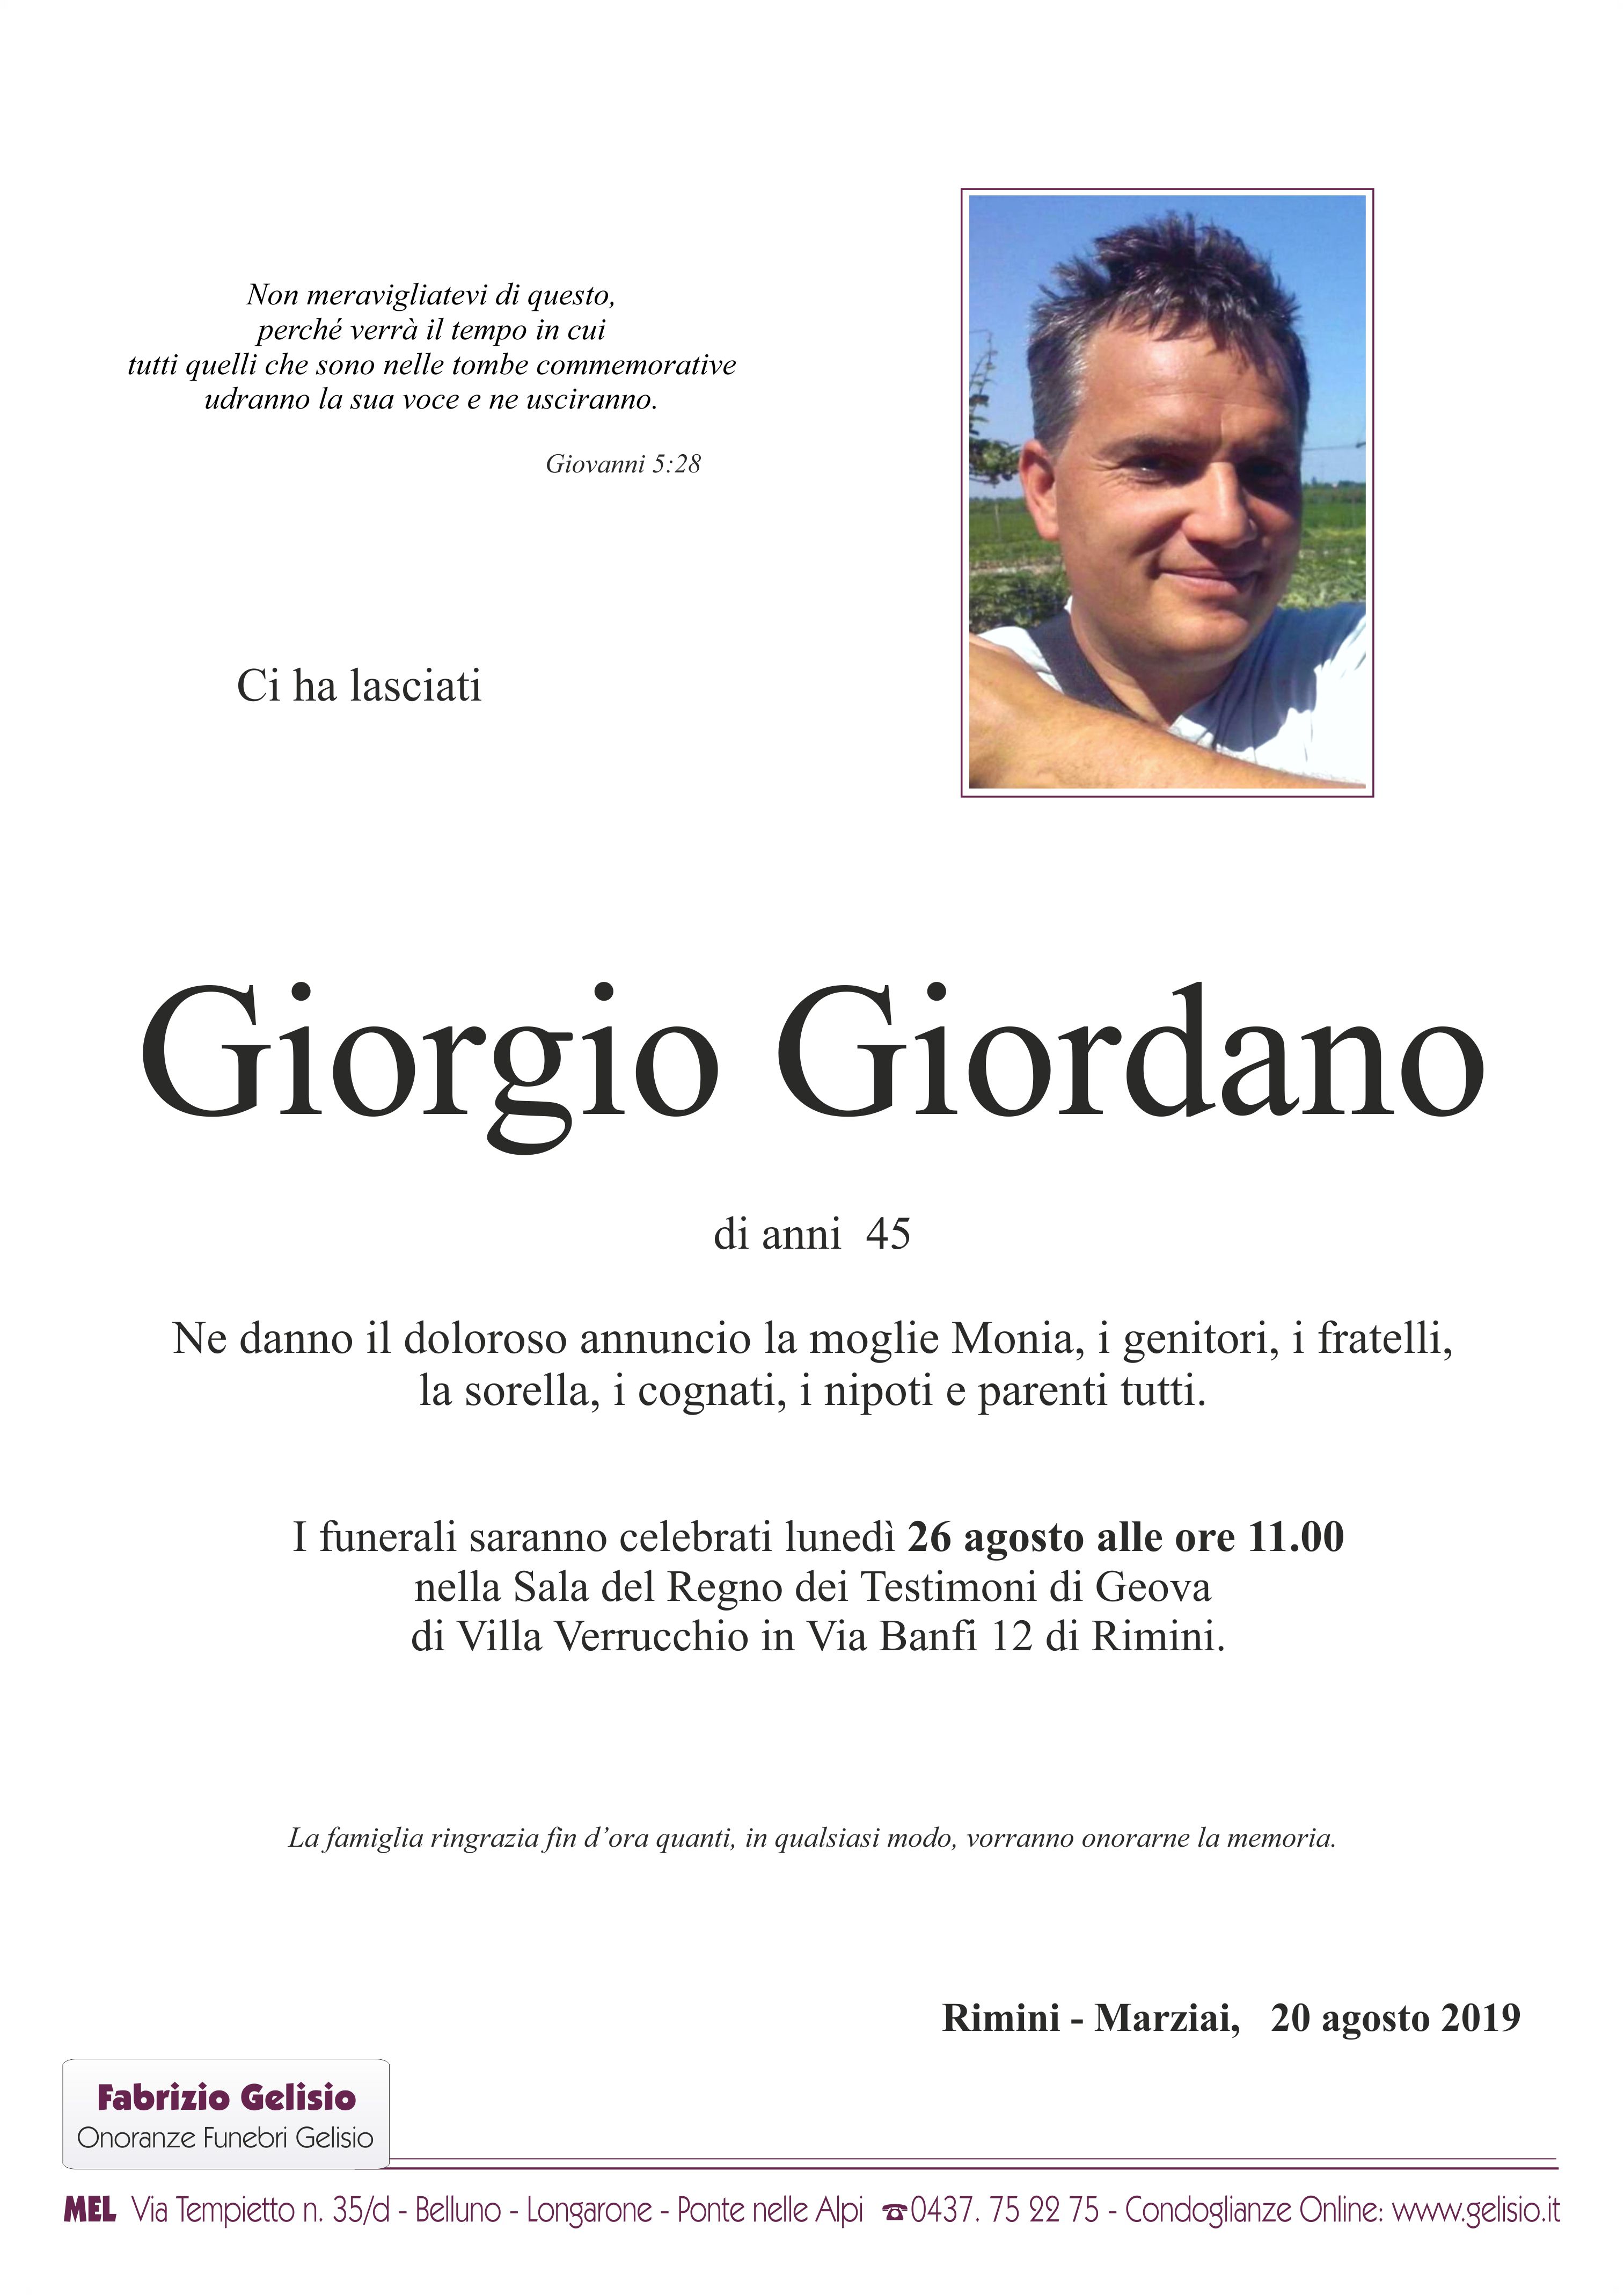 Giordano Giorgio